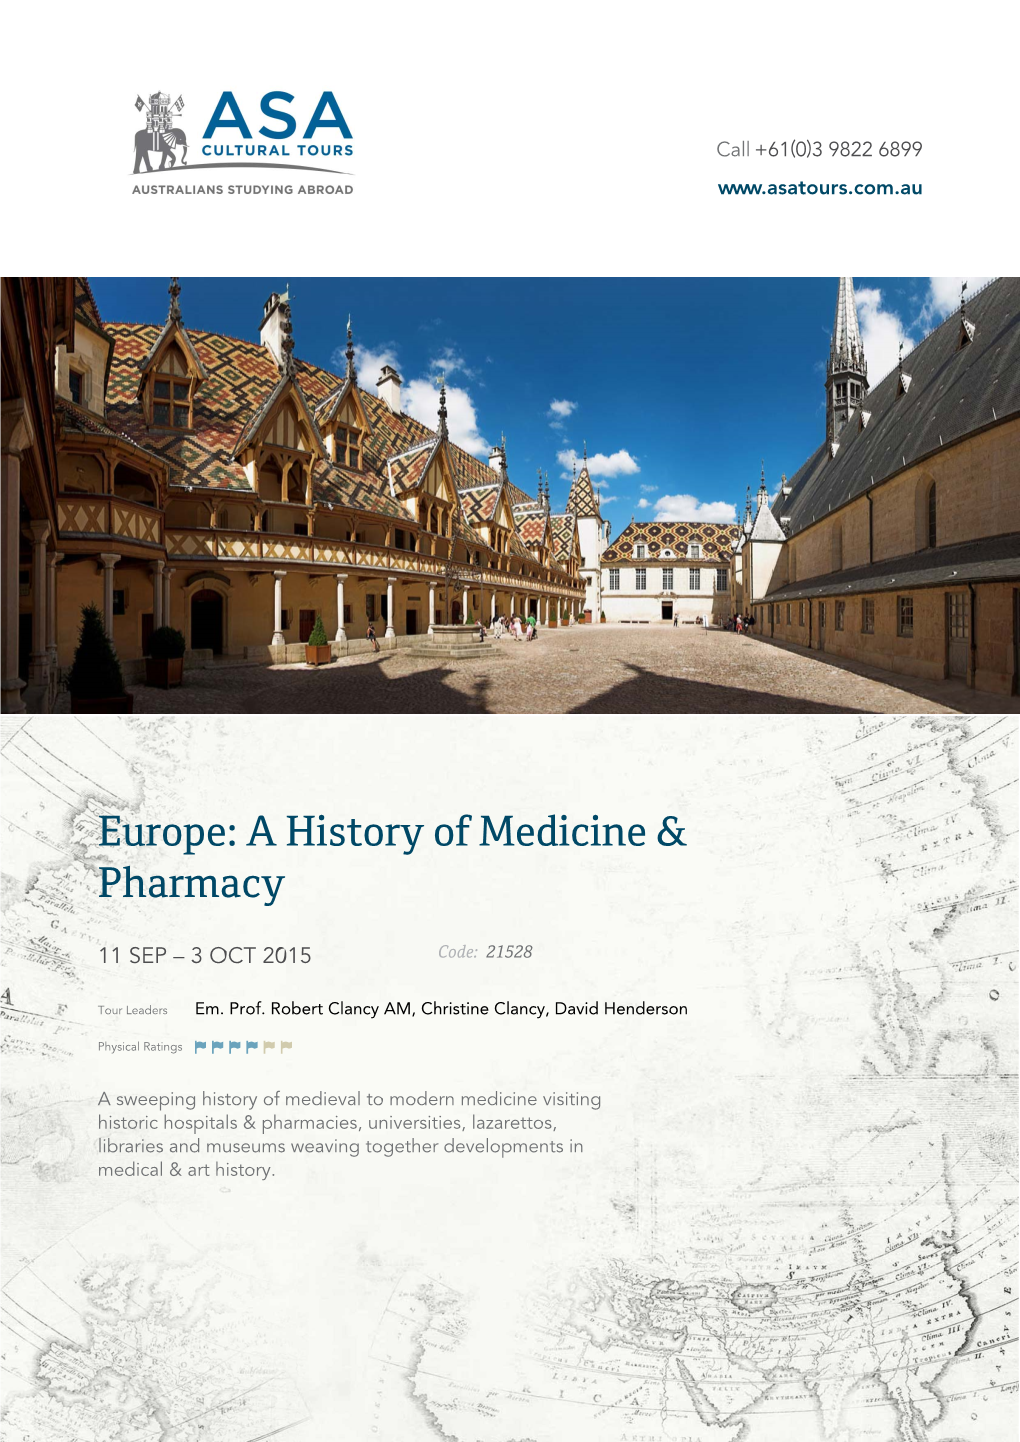 Europe: a History of Medicine & Pharmacy